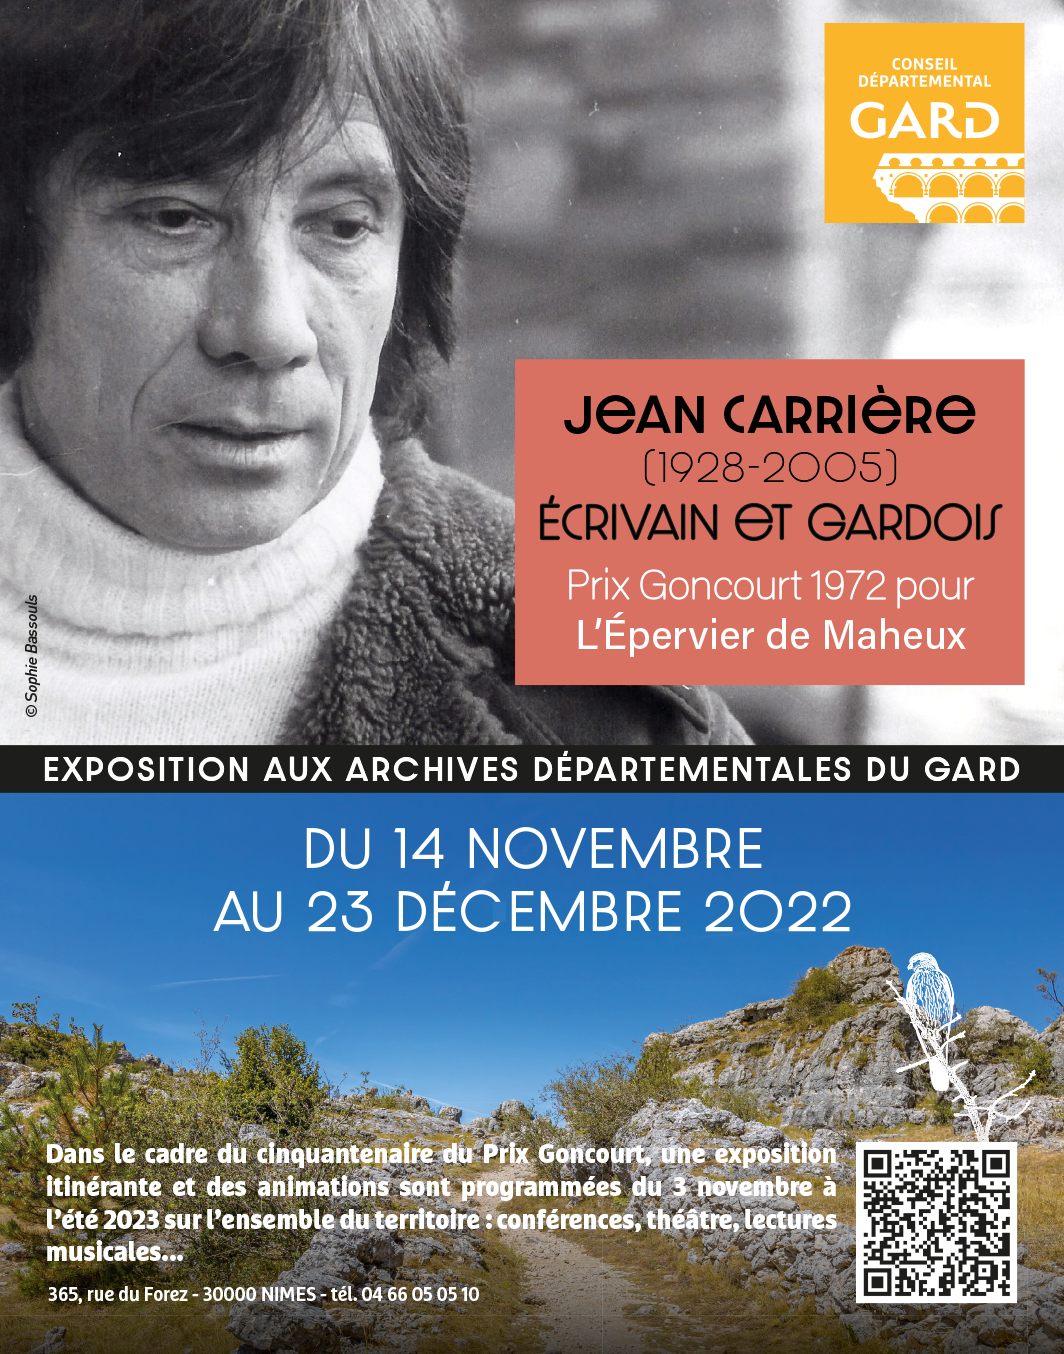 JeanCarriere_GardInfo